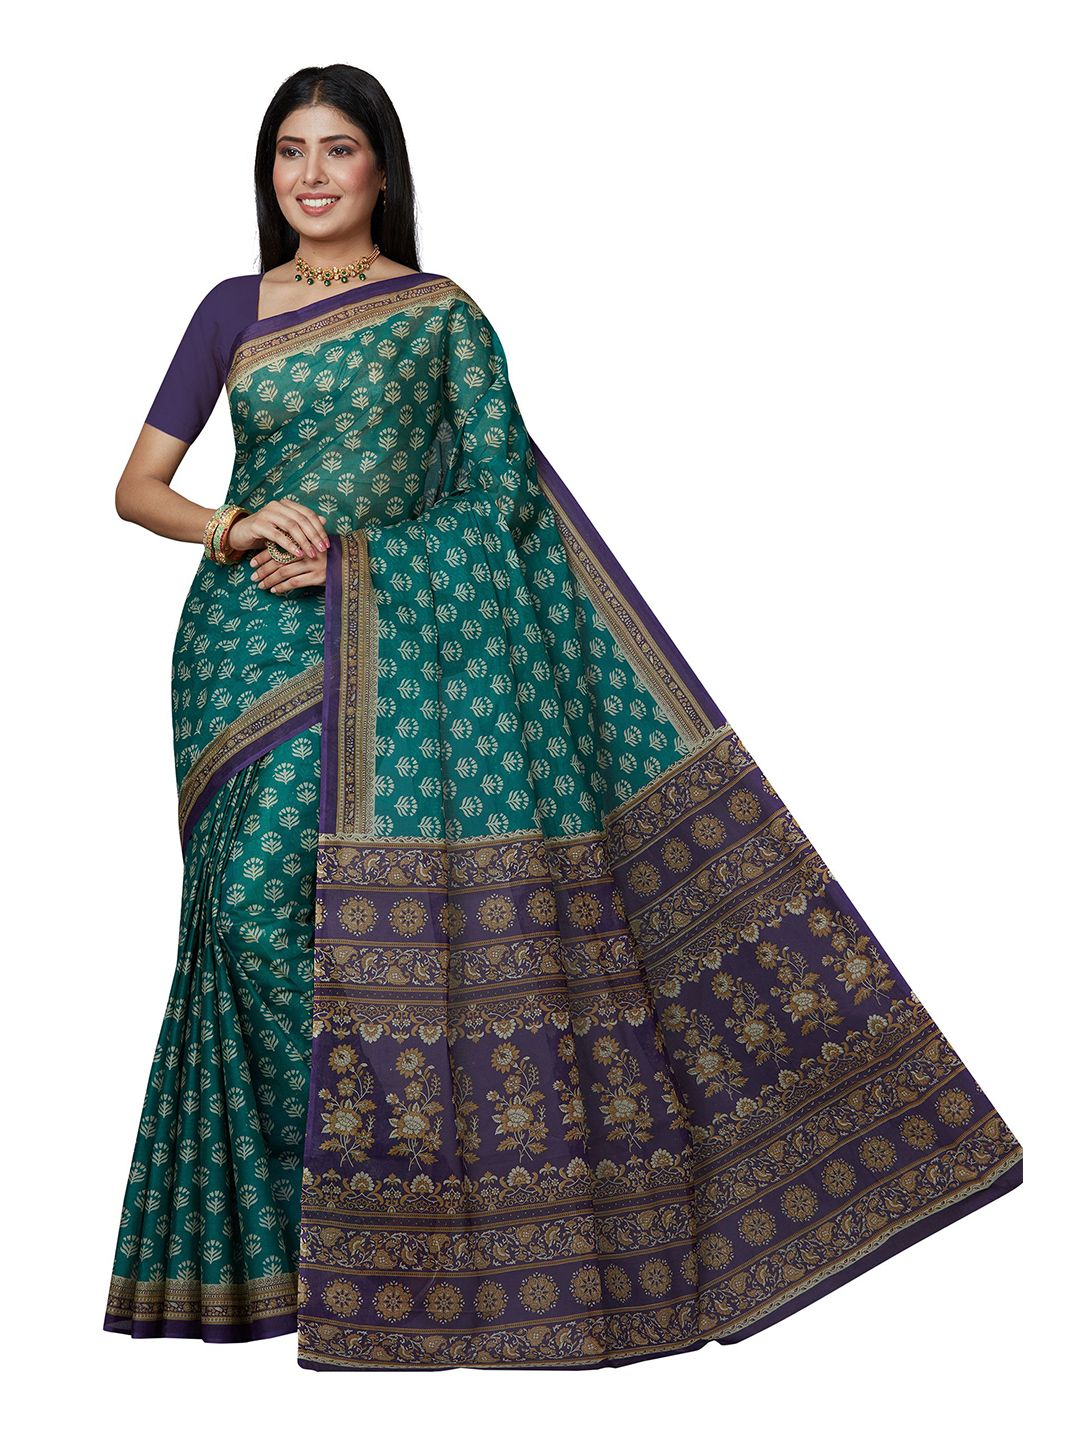 SHANVIKA Teal Green & Violet Ethnic Motifs Pure Cotton Block Print Saree Price in India